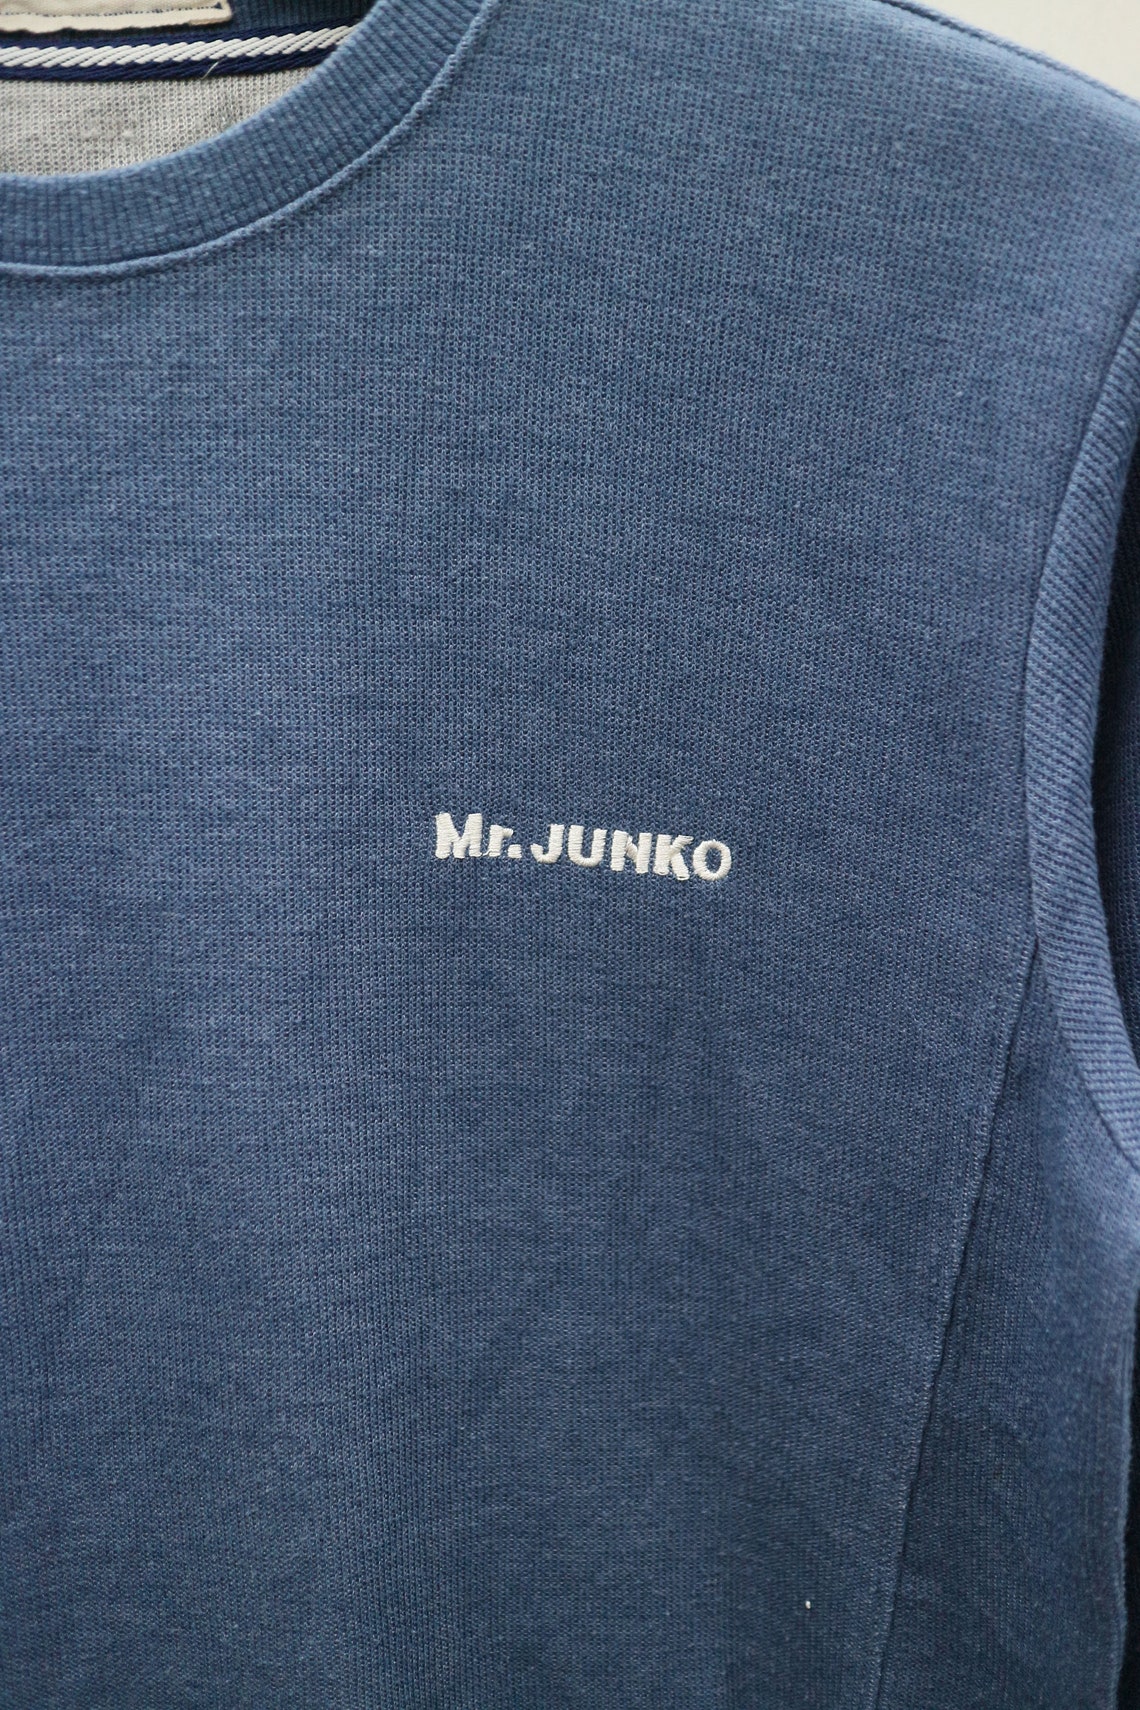 Vintage MR.JUNKO Junko Koshino Big Logo Big Spell Blue | Etsy